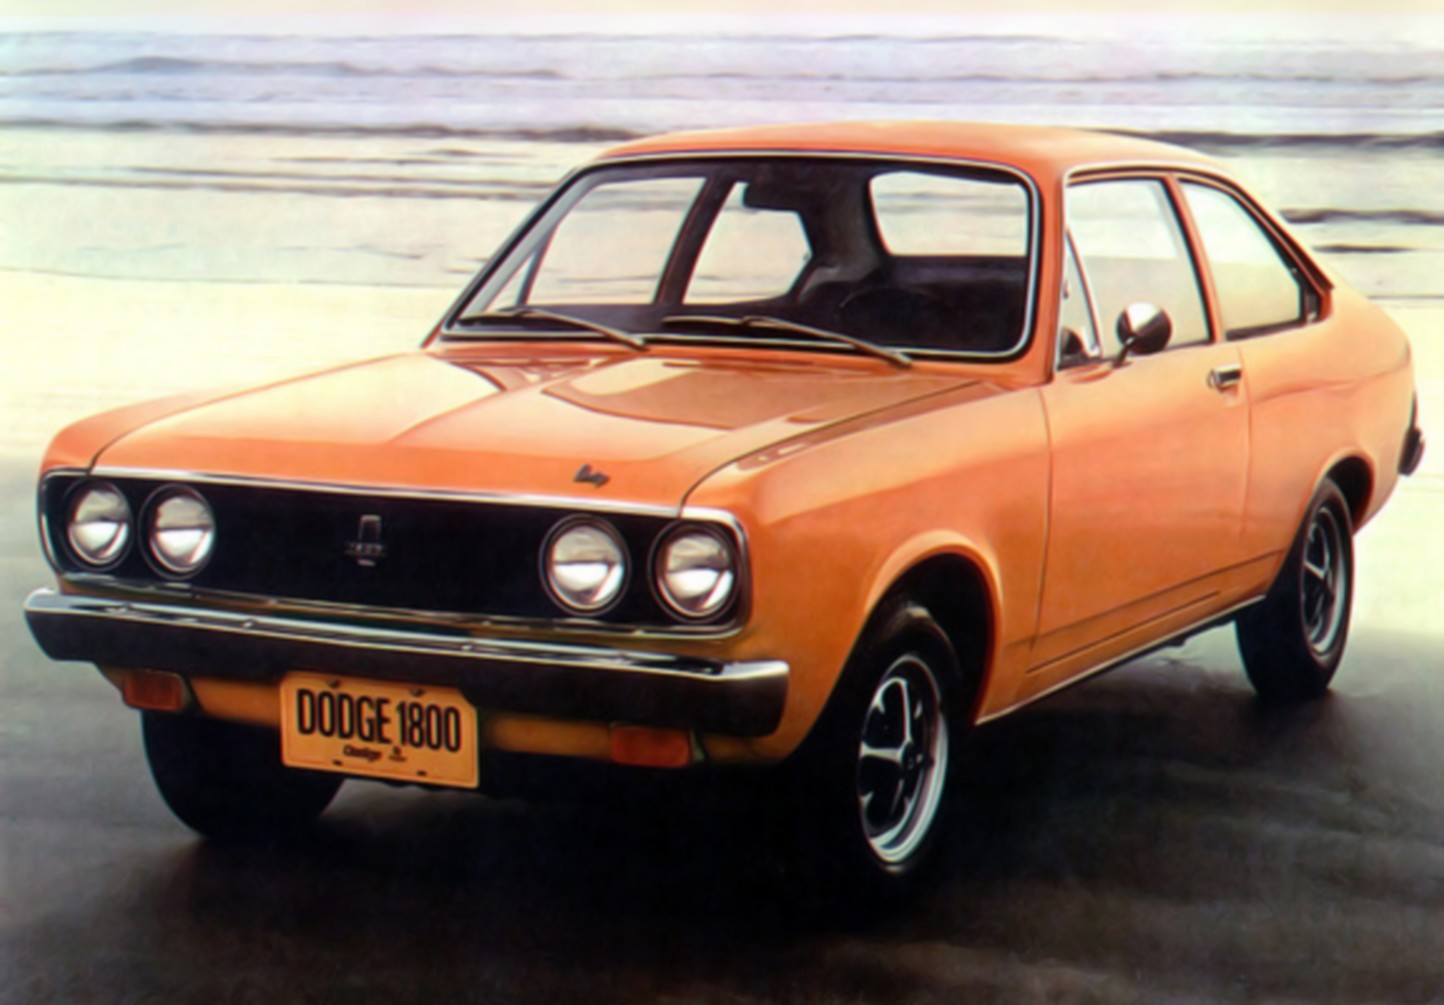 Dodge 1800 1977 favcars  dodge_1800_1973_wallpapers_1_b nnn 